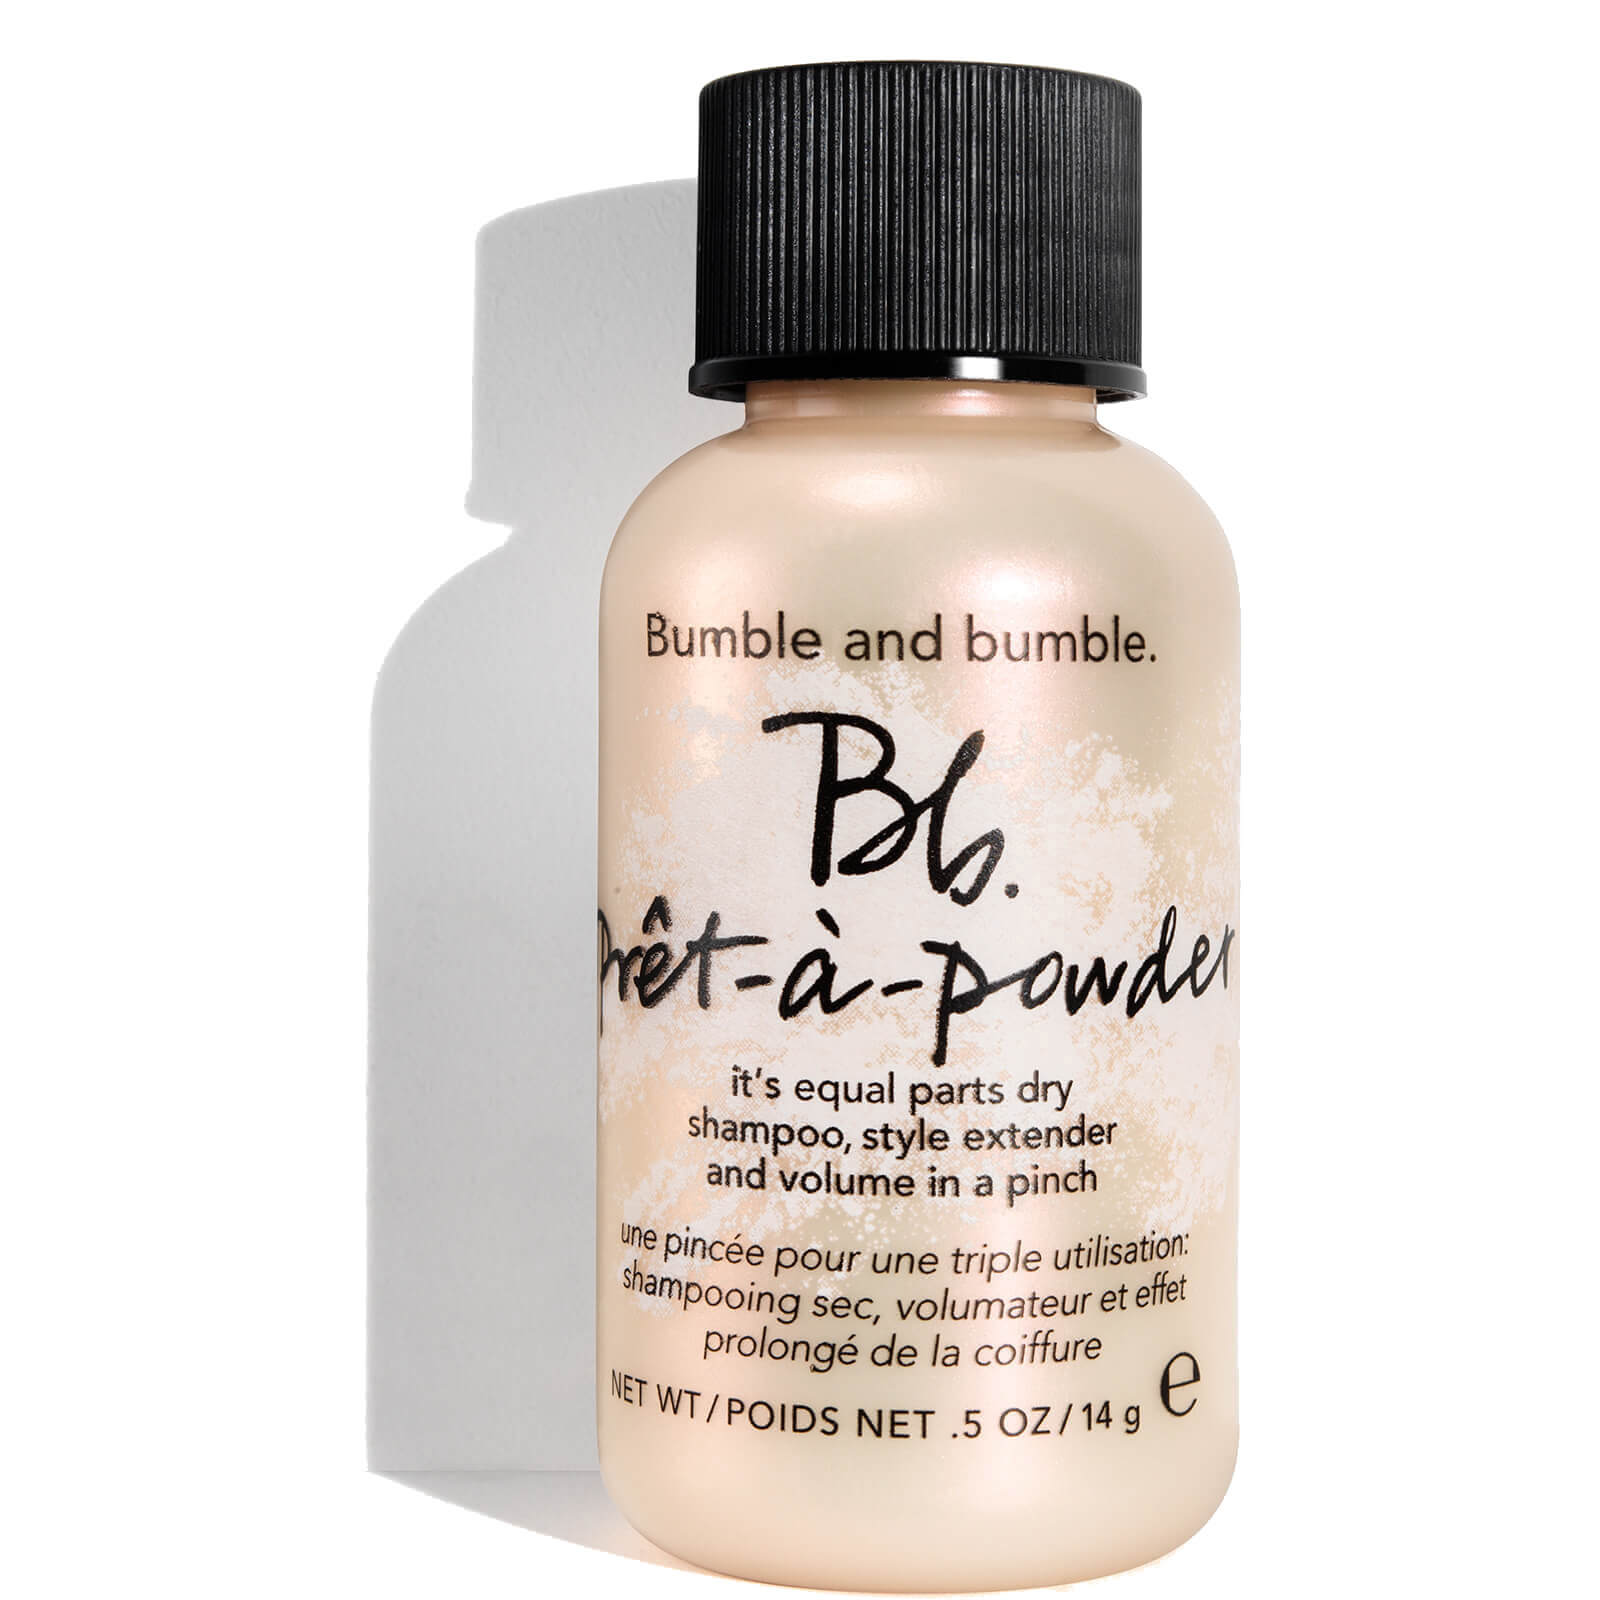 Photos - Hair Product Bumble and bumble. Bumble and bumble Pret a Powder 14g B24M010000 